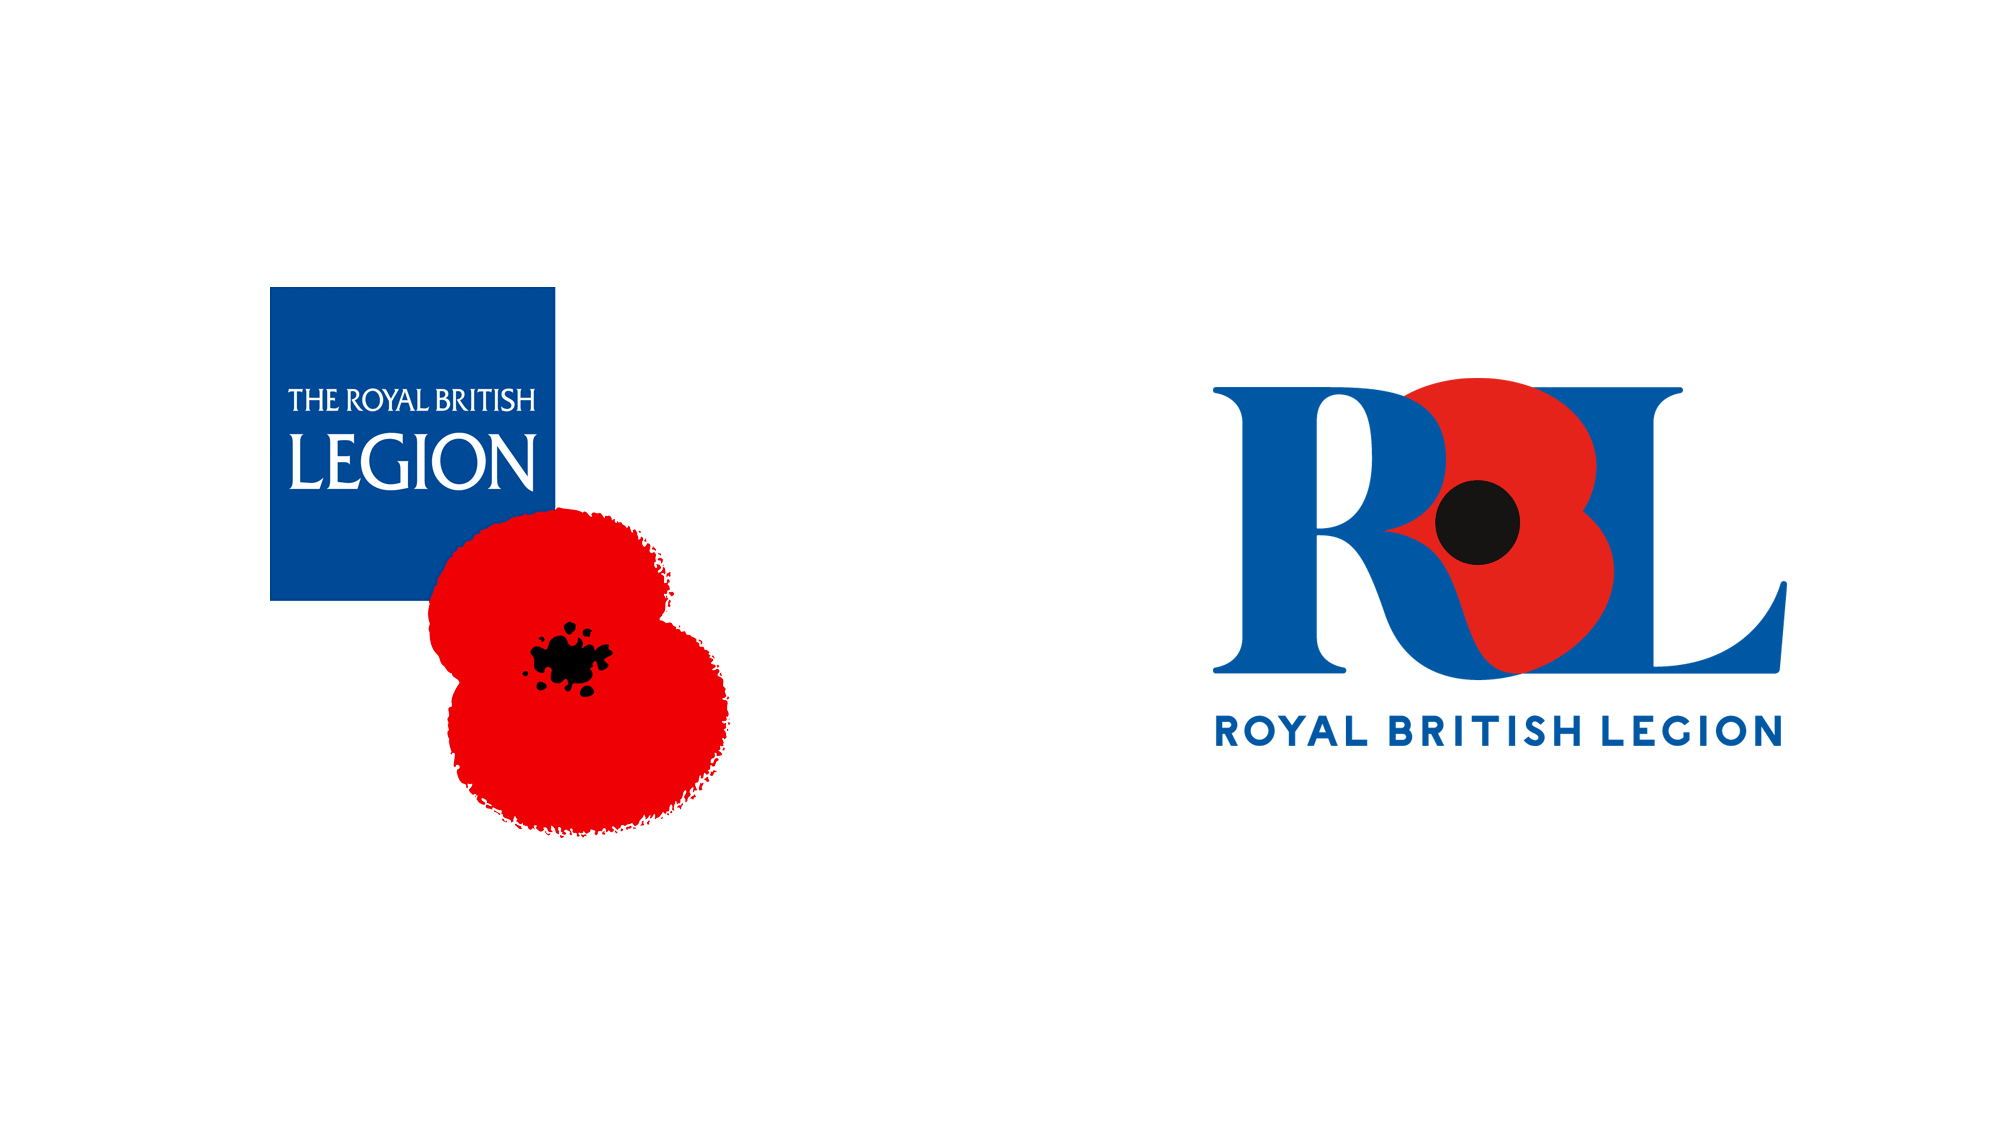 Royal Boys Logo